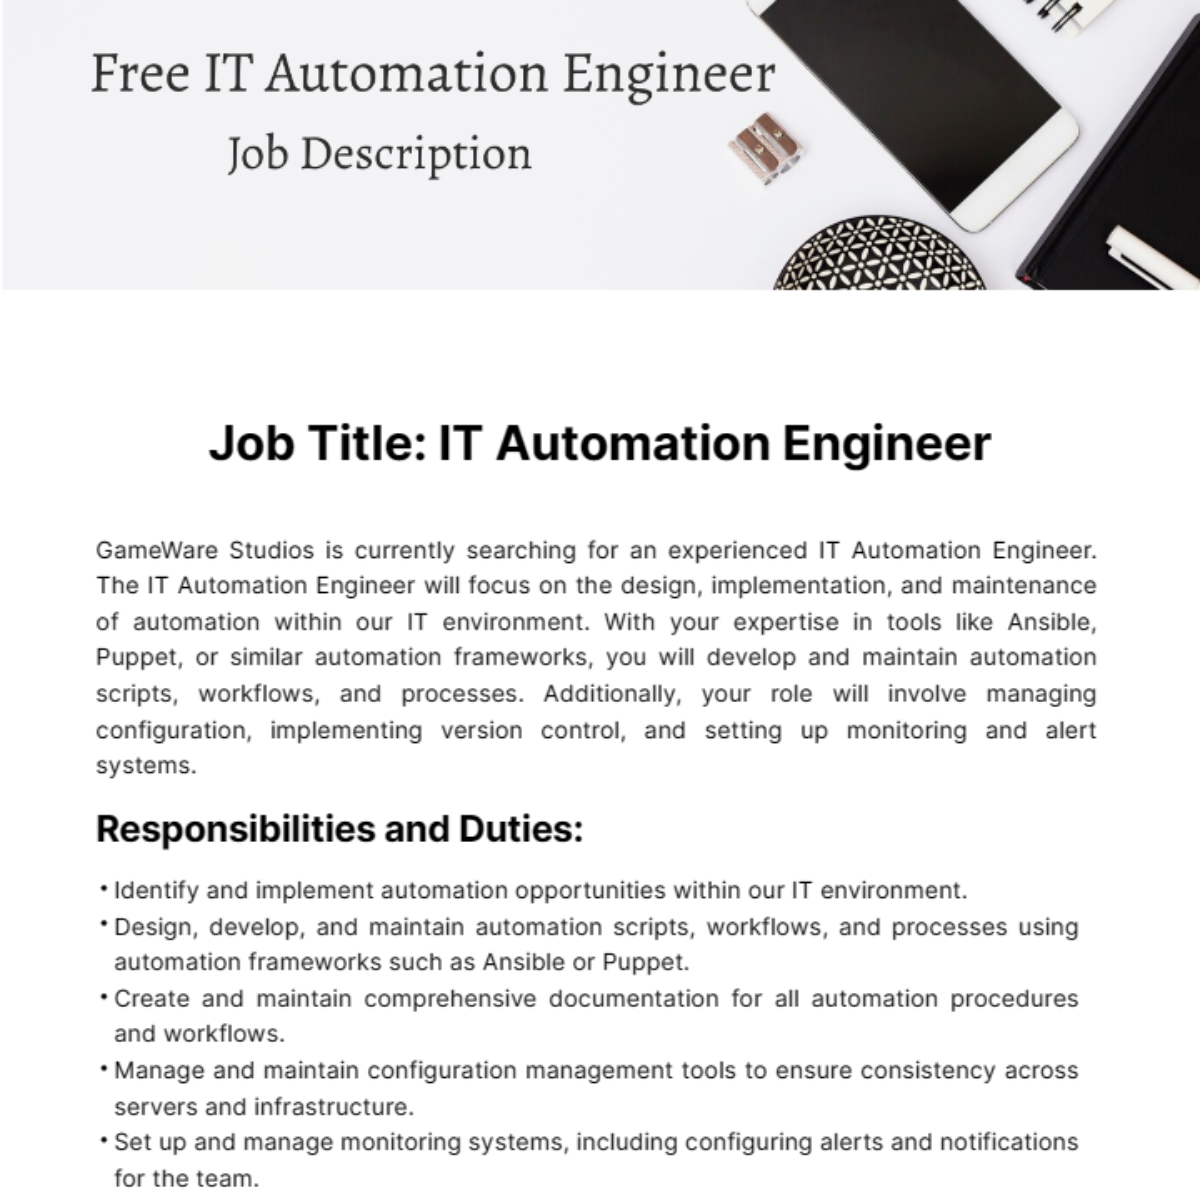 Free IT Automation Engineer Job Description Template